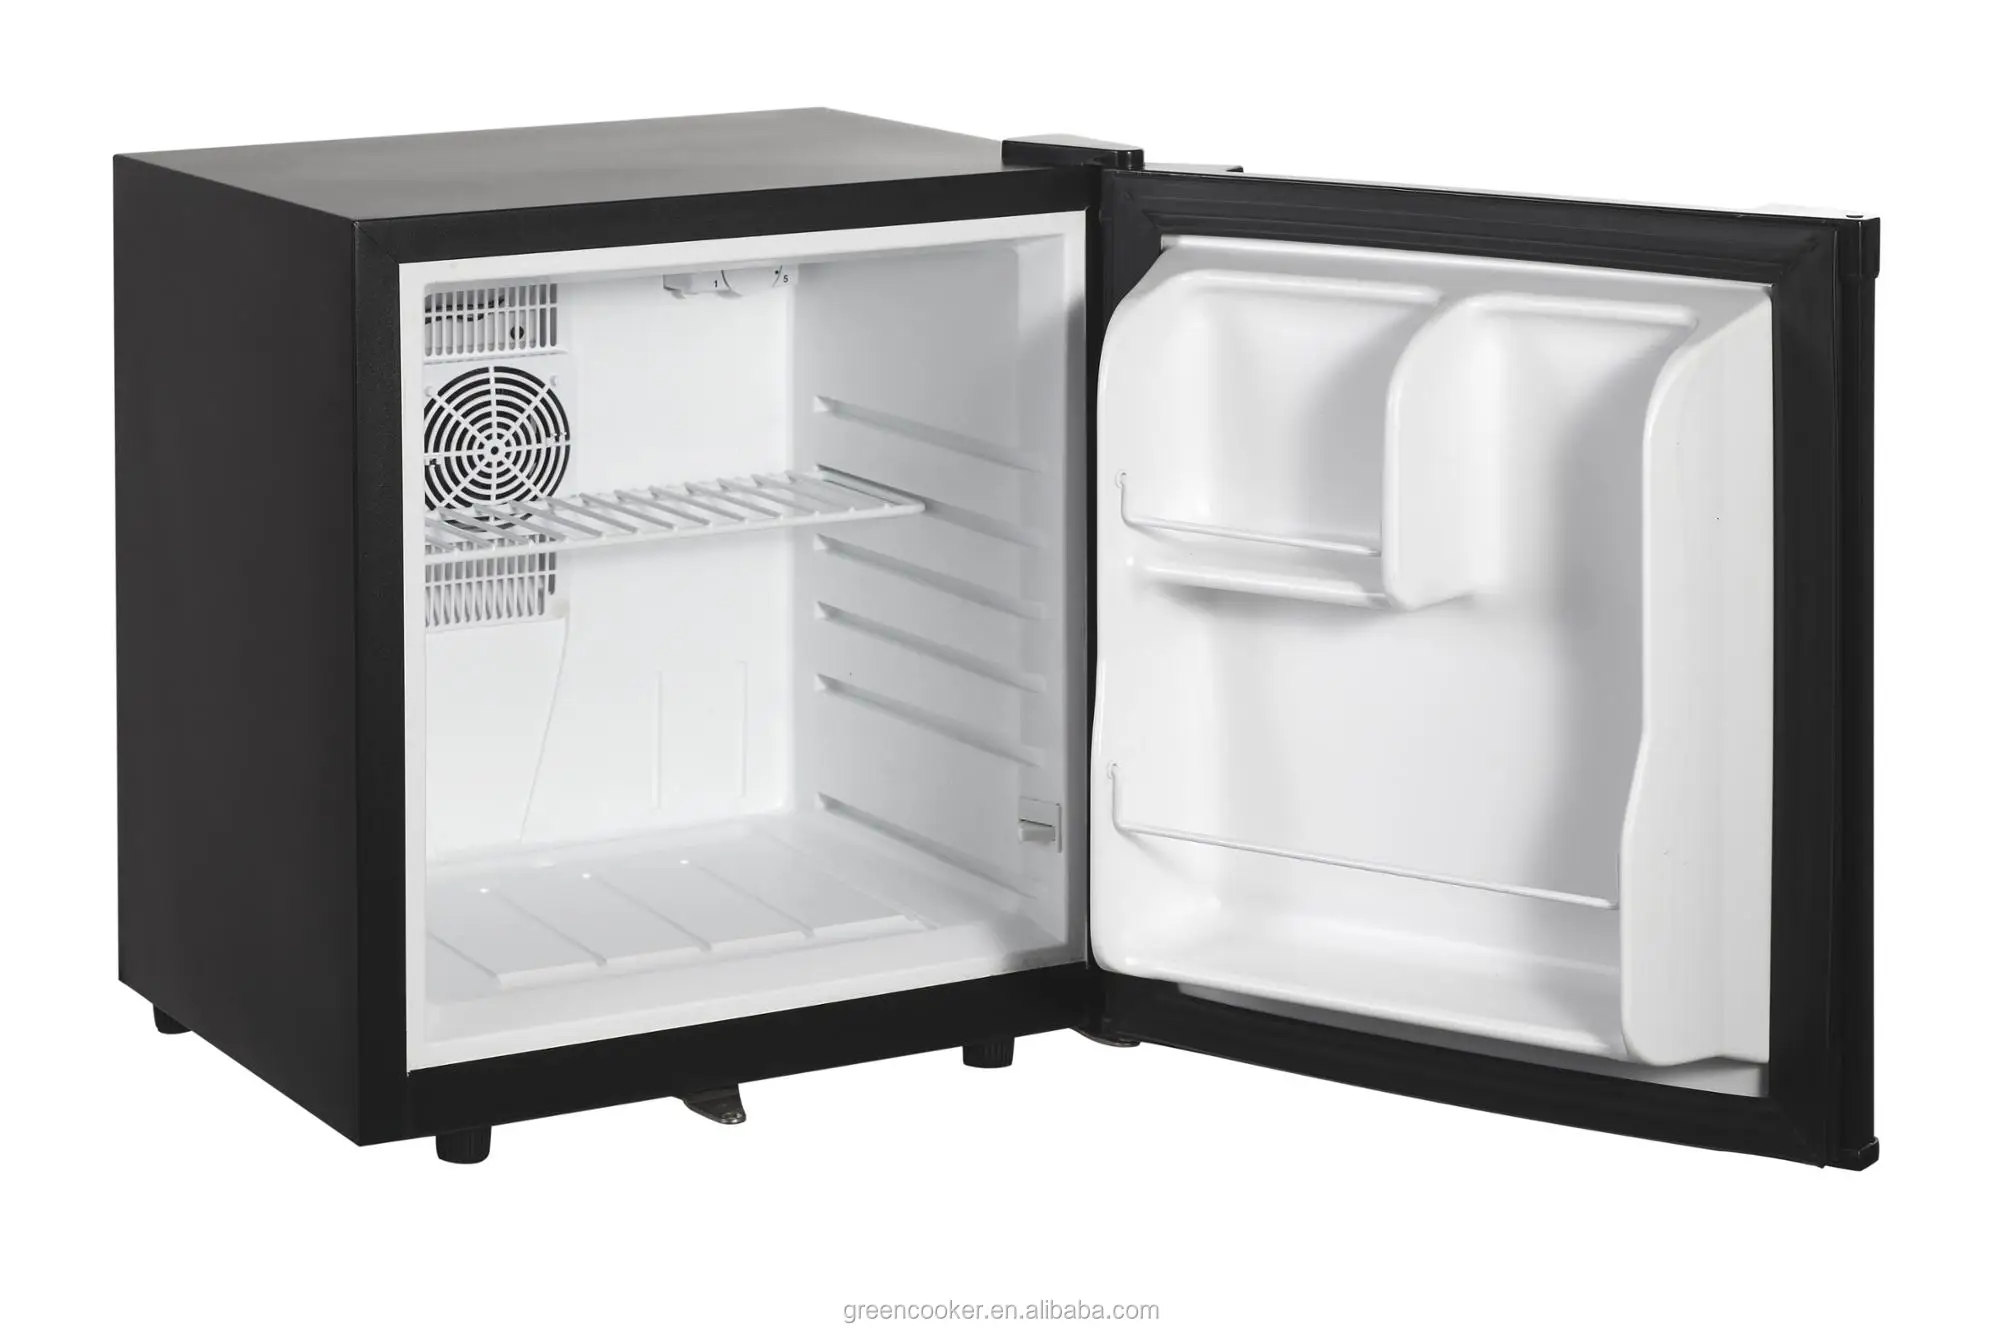 410019 Мини-холодильник Colet mnbx4